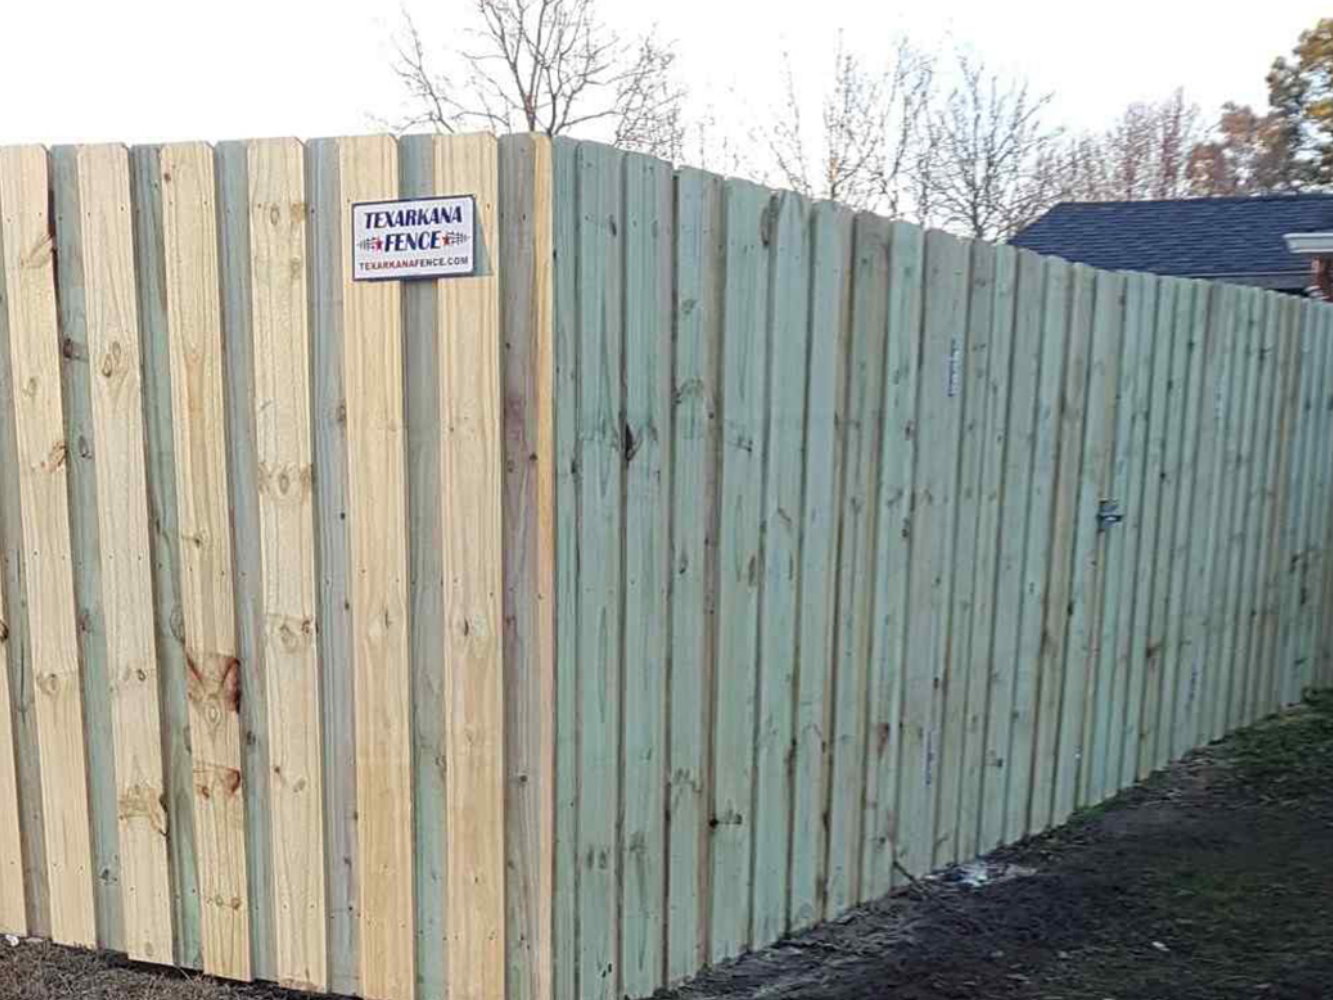 Genoa AK shadowbox style wood fence